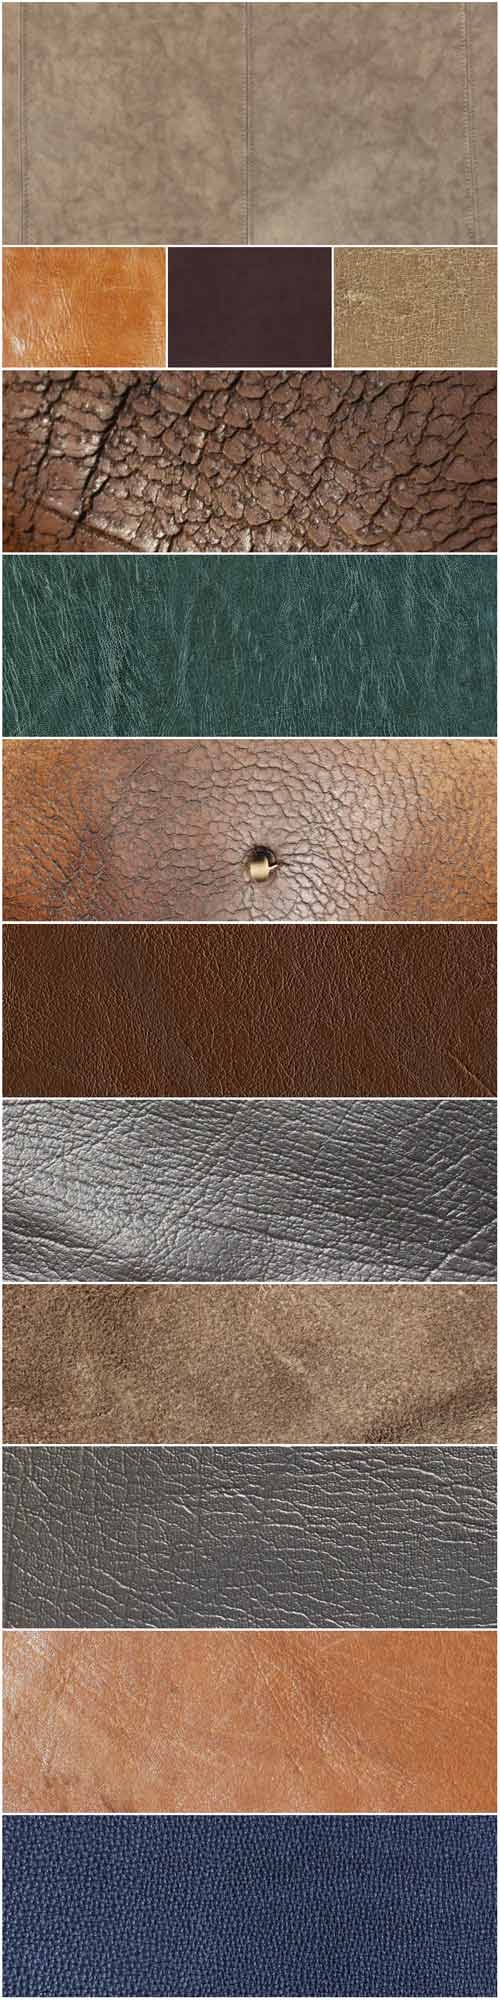 Leather texture mammals part 3